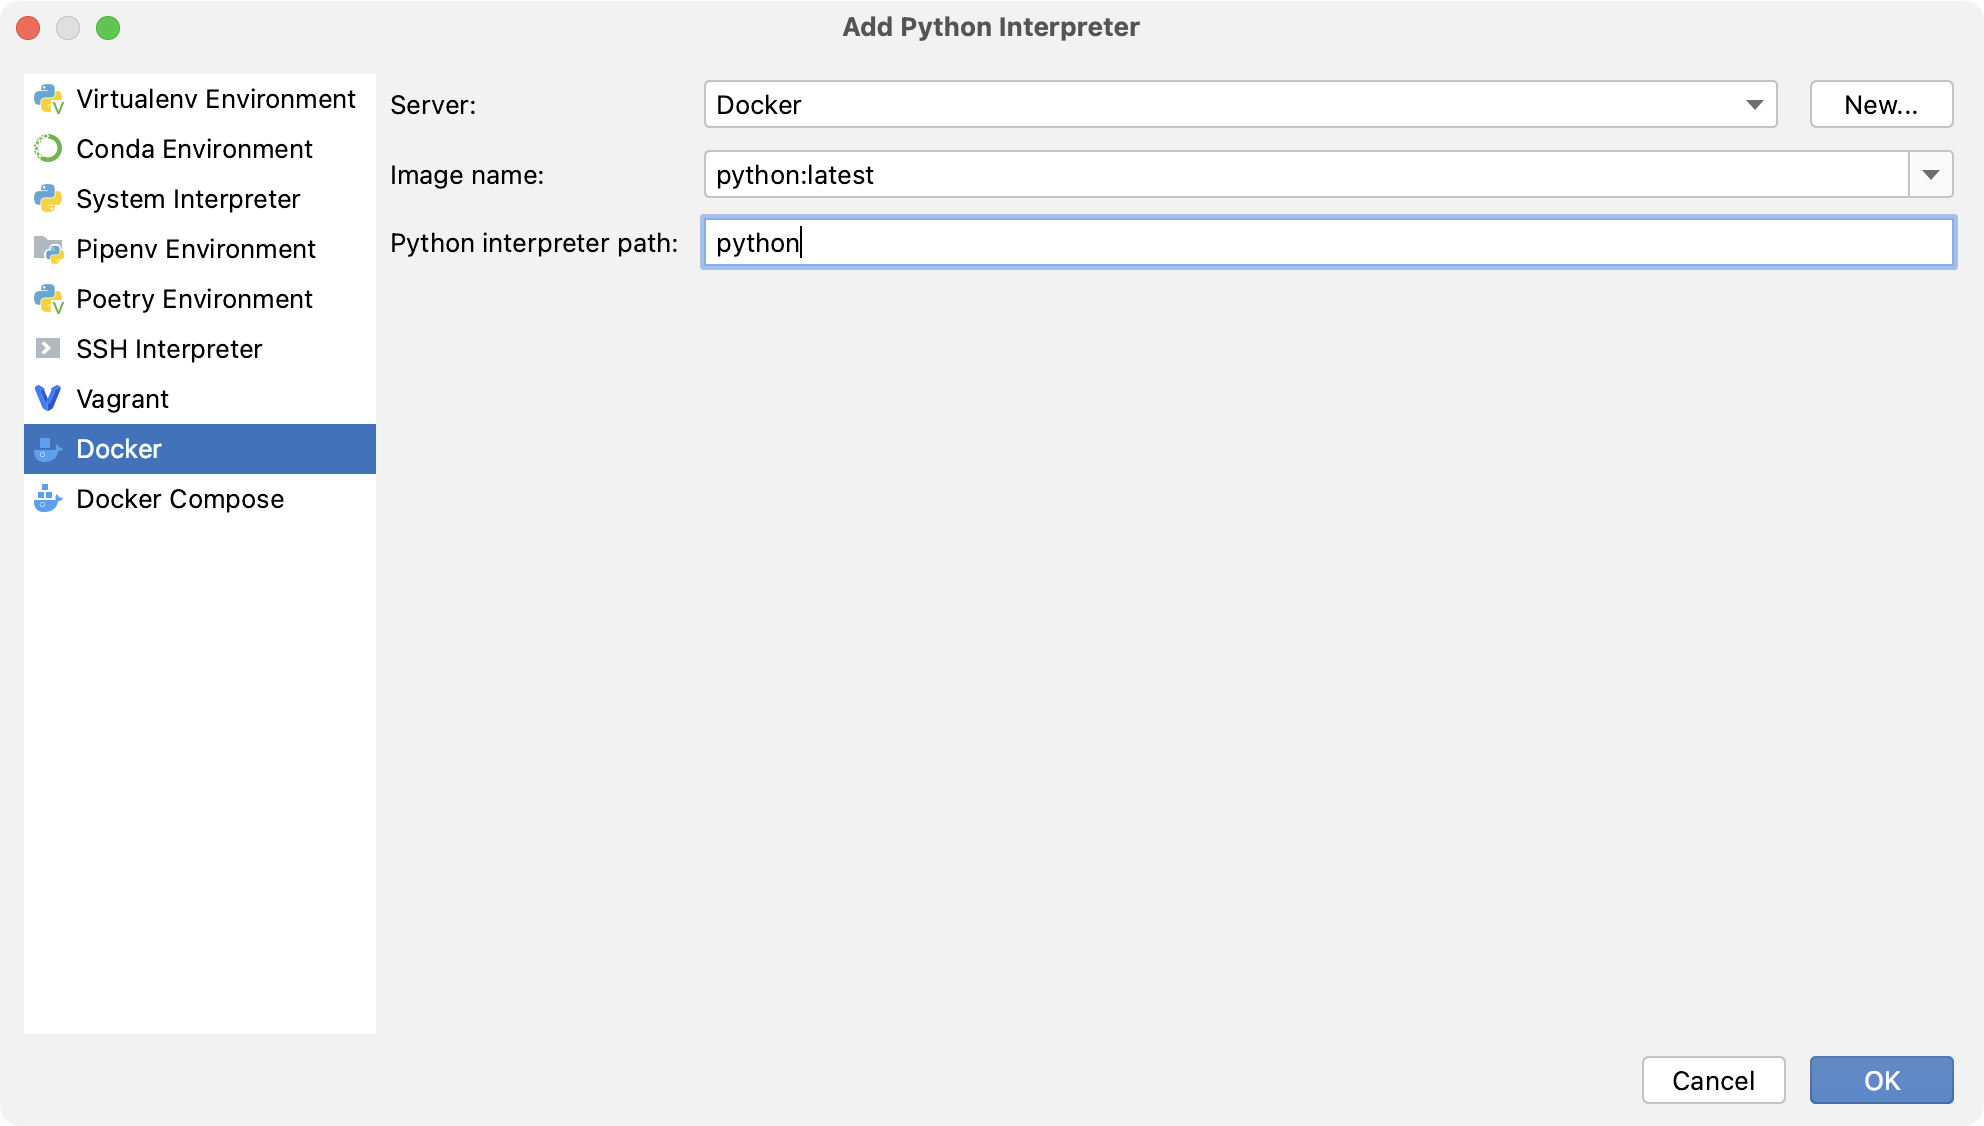 Configuring a Python interpreter using Docker